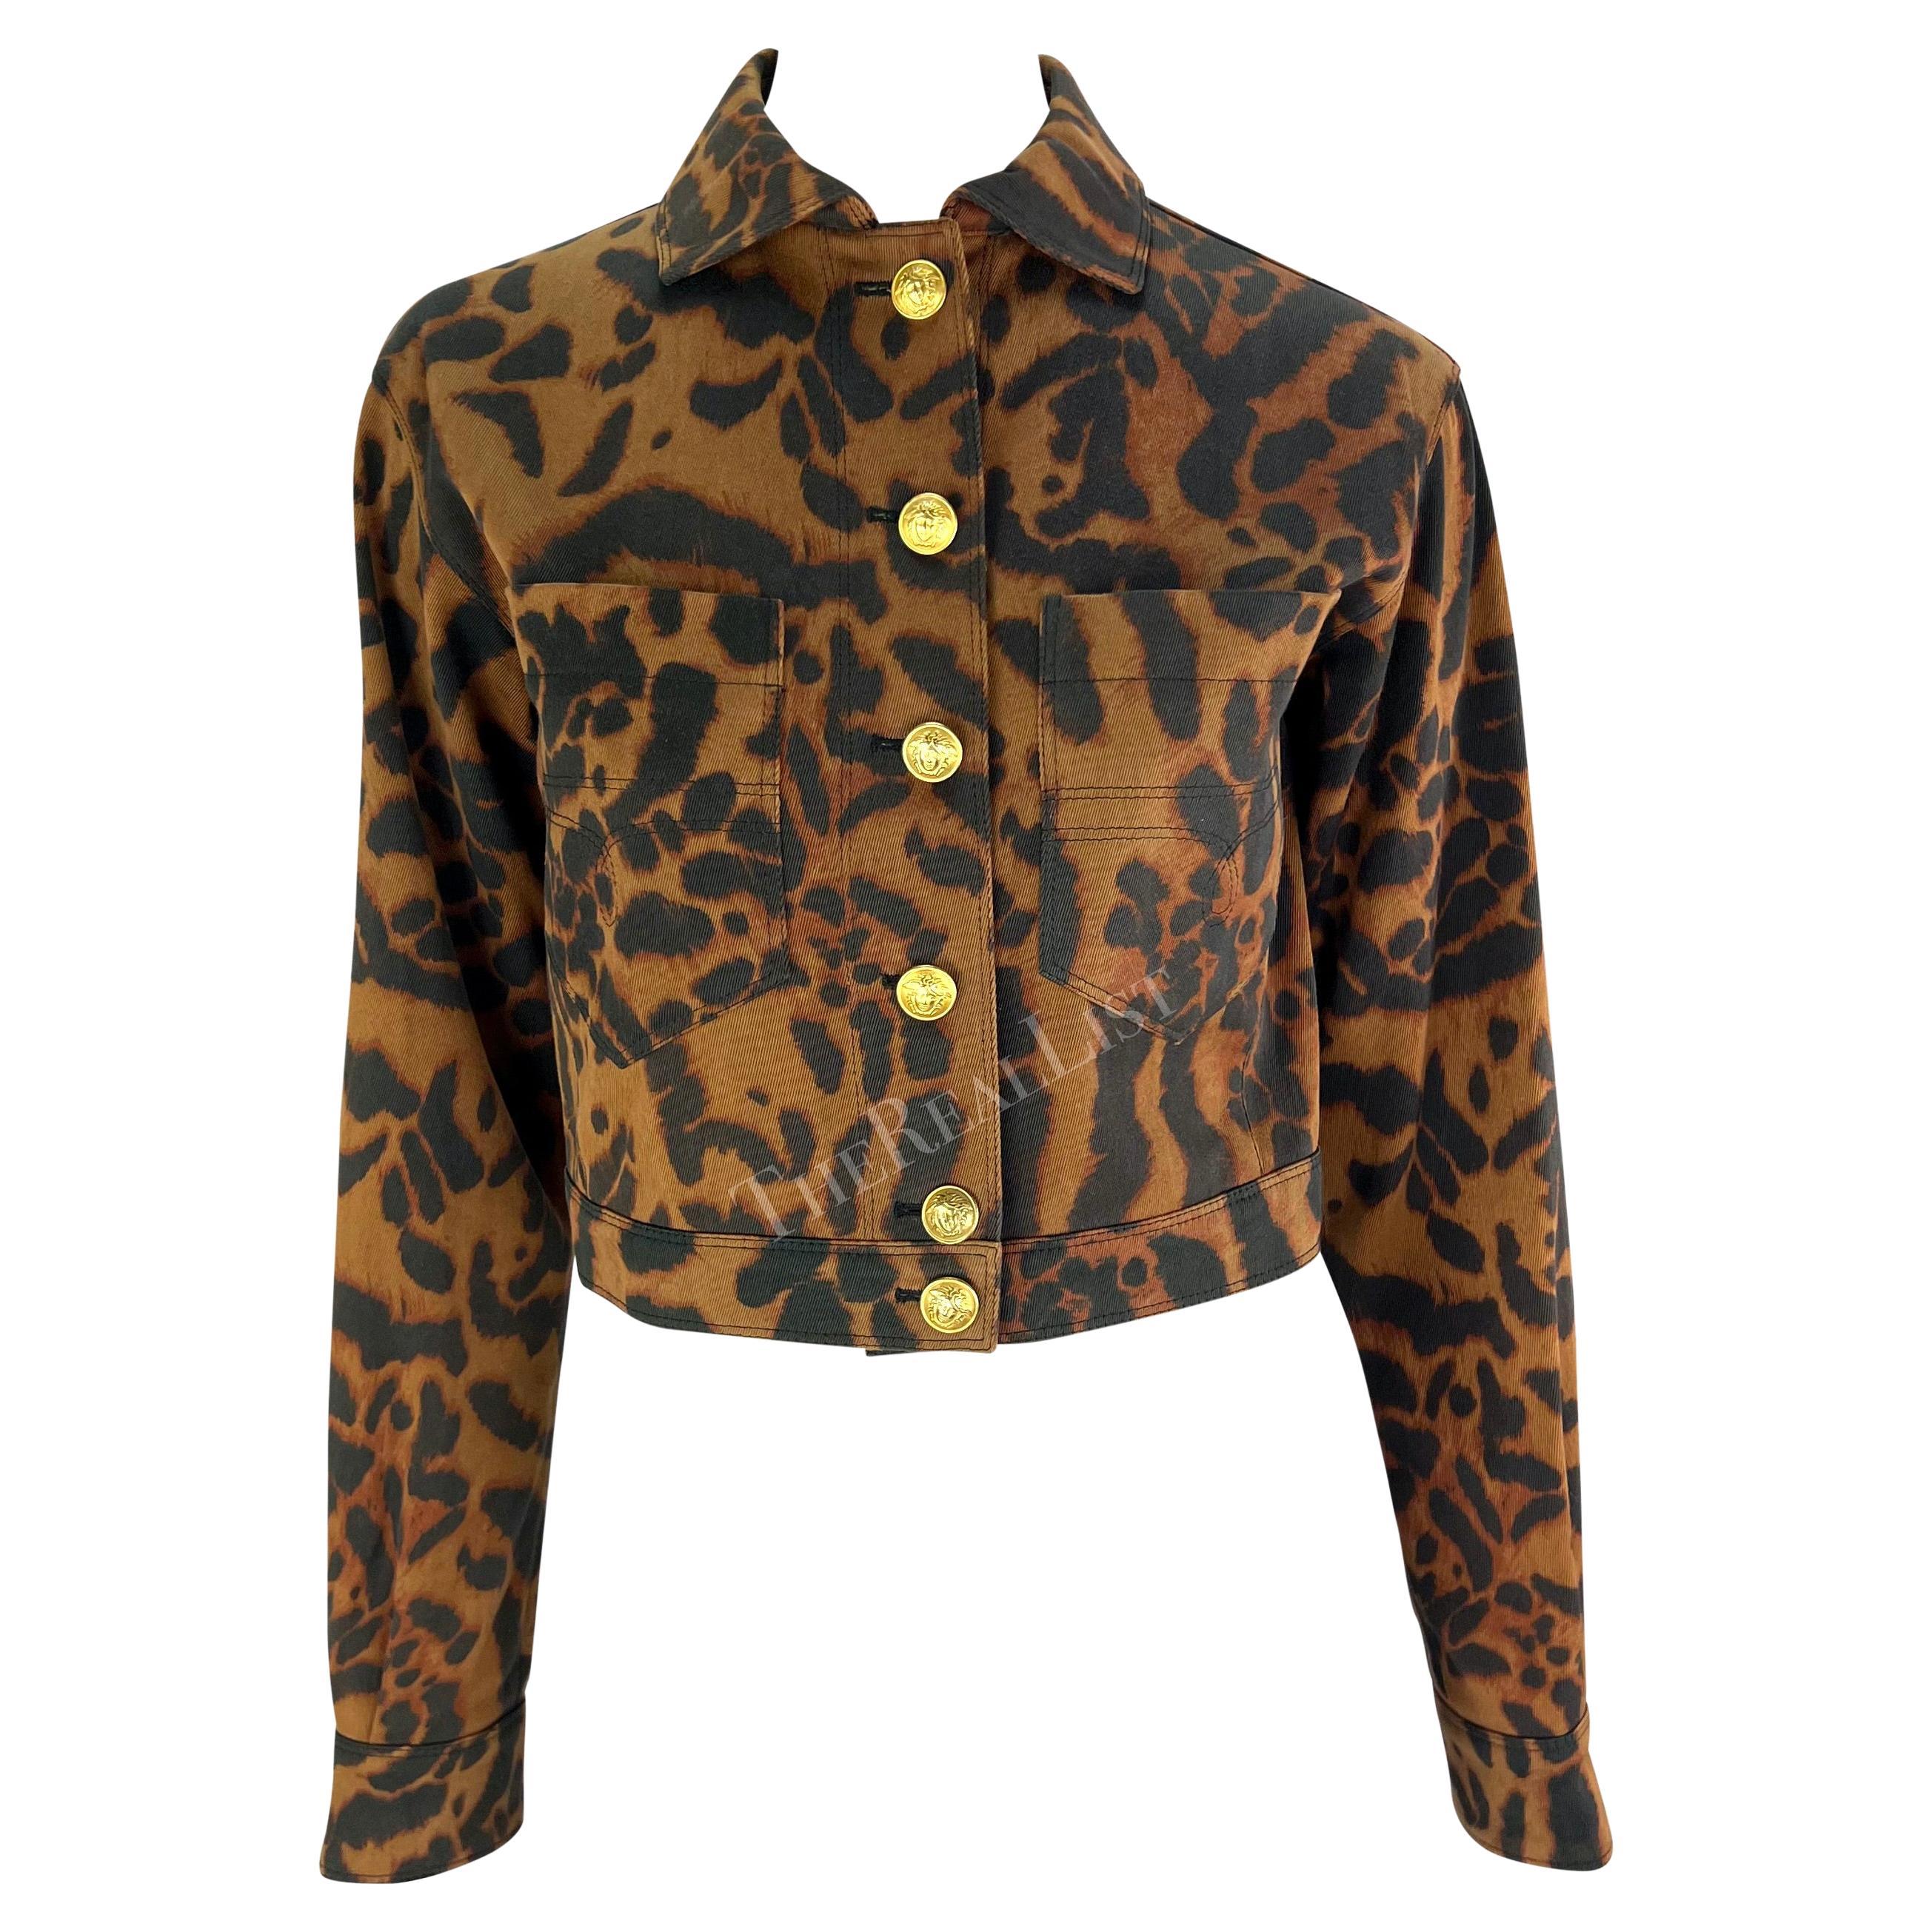 S/S 1992 Gianni Versace Runway Brown Cheetah Print Denim Medusa Cropped Jacket For Sale